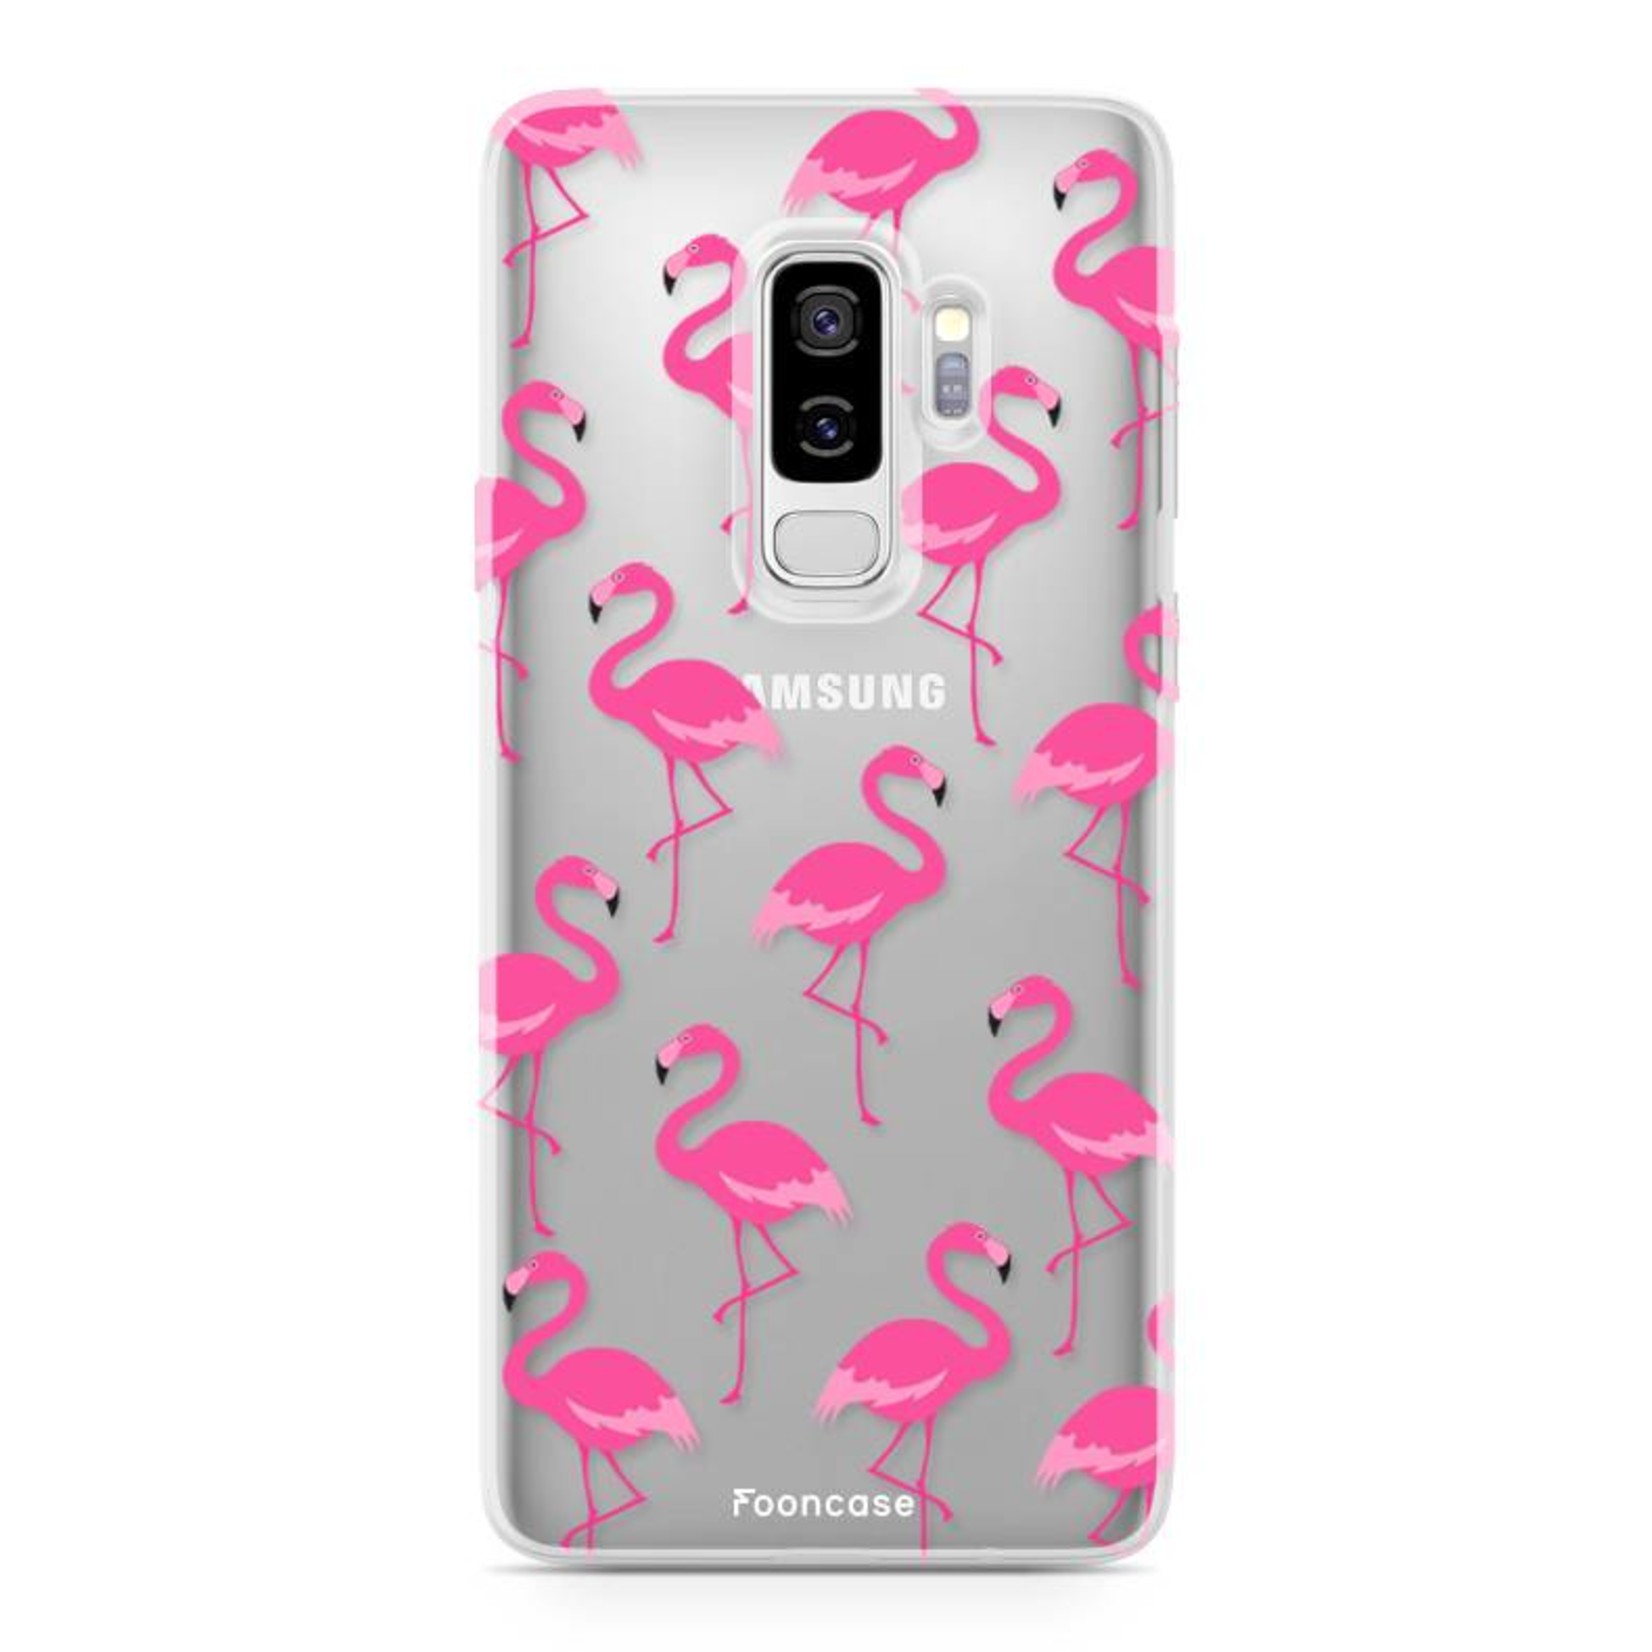 FOONCASE Samsung Galaxy S9 Plus hoesje TPU Soft Case - Back Cover - Flamingo